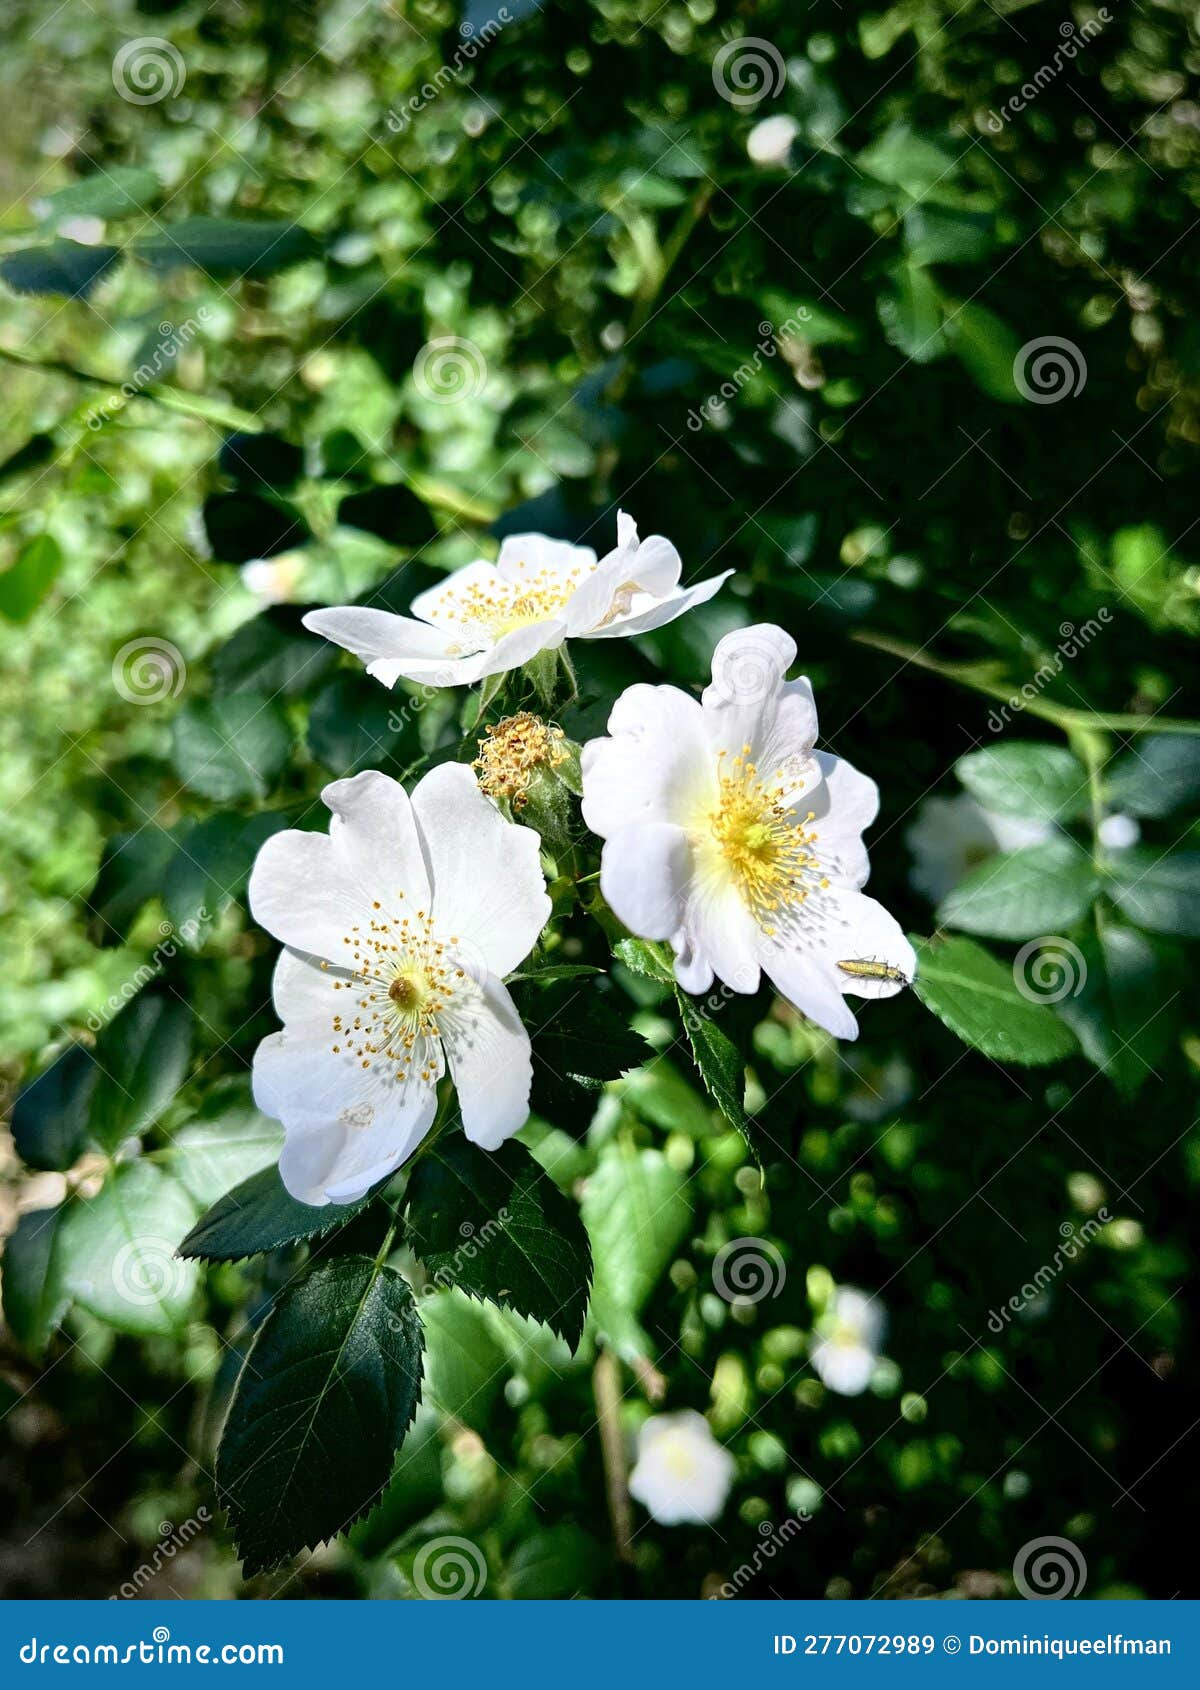 three white silvestre roses